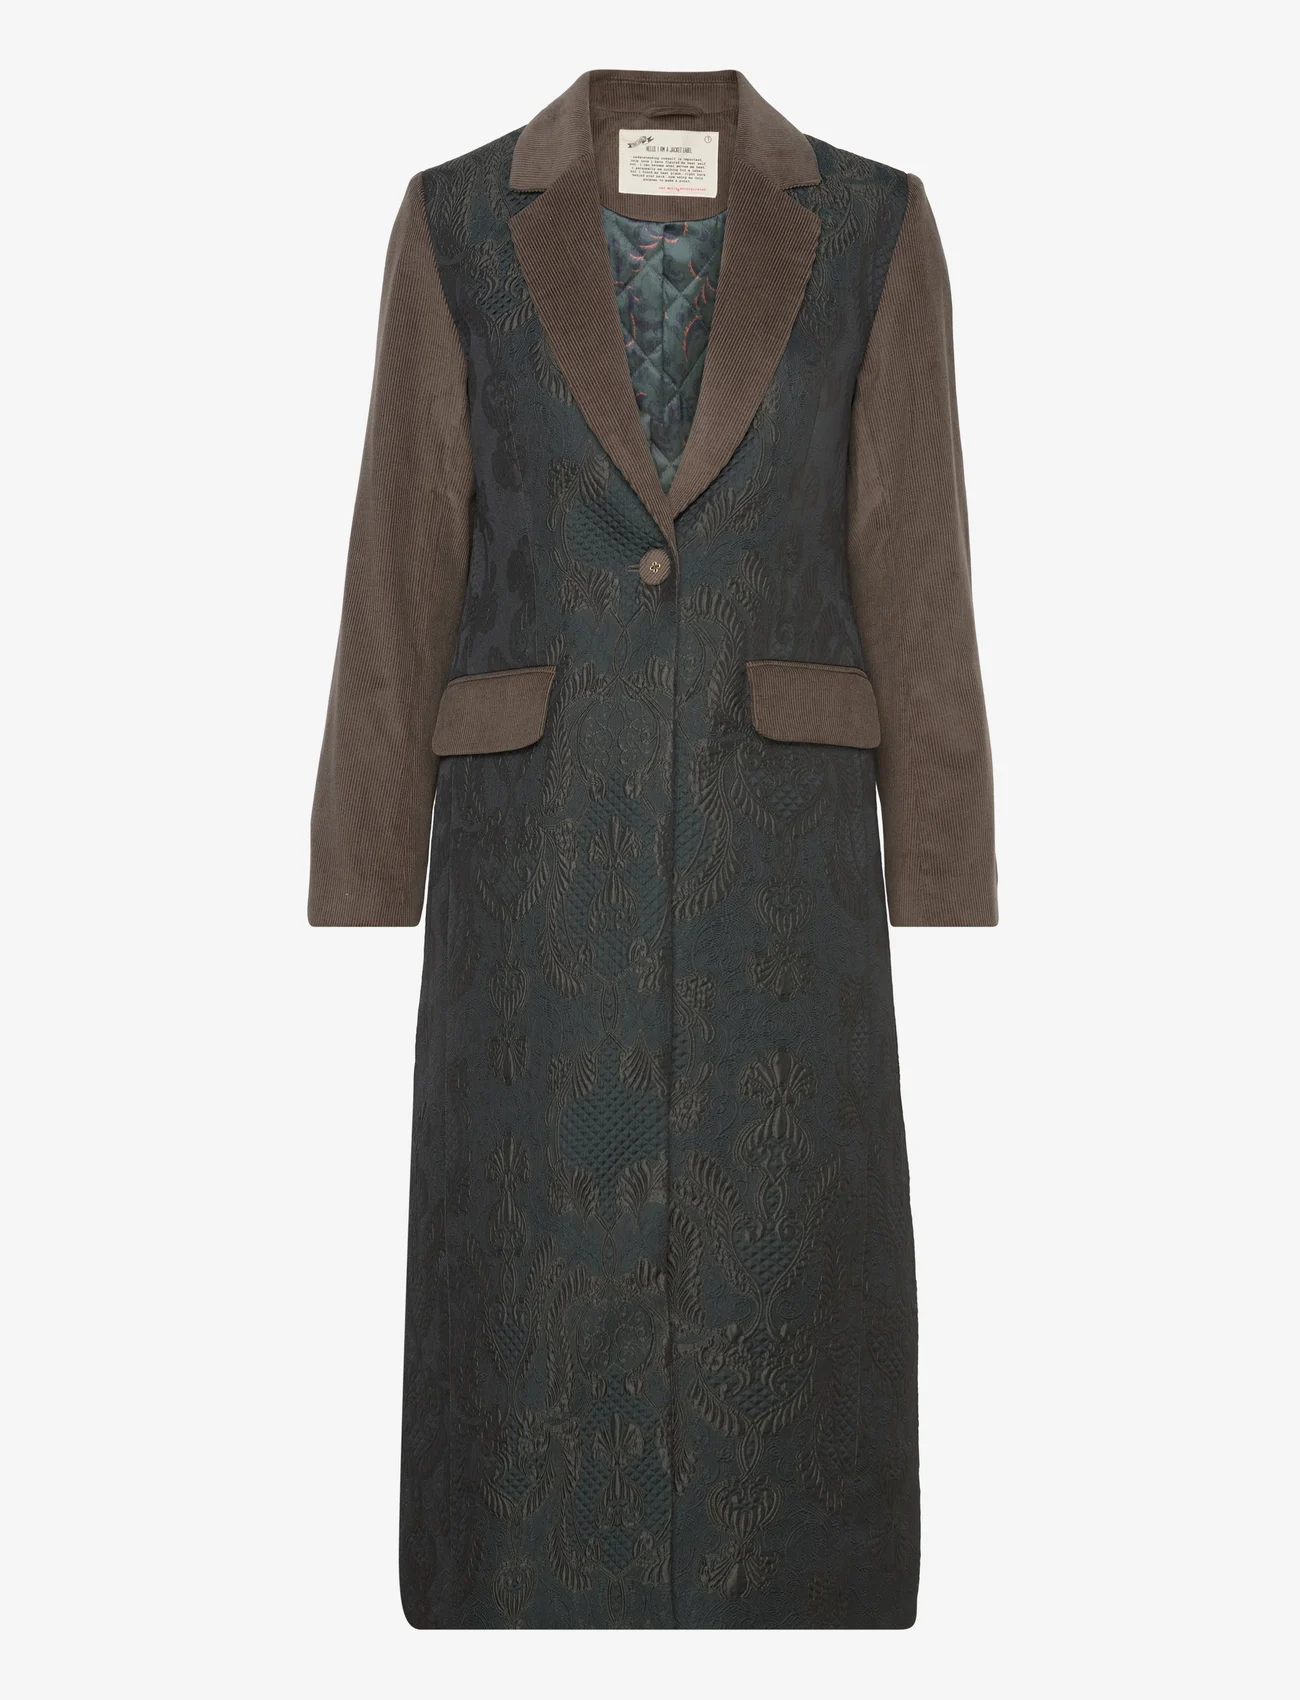 ODD MOLLY - Carrie Coat - light coats - dark green - 0